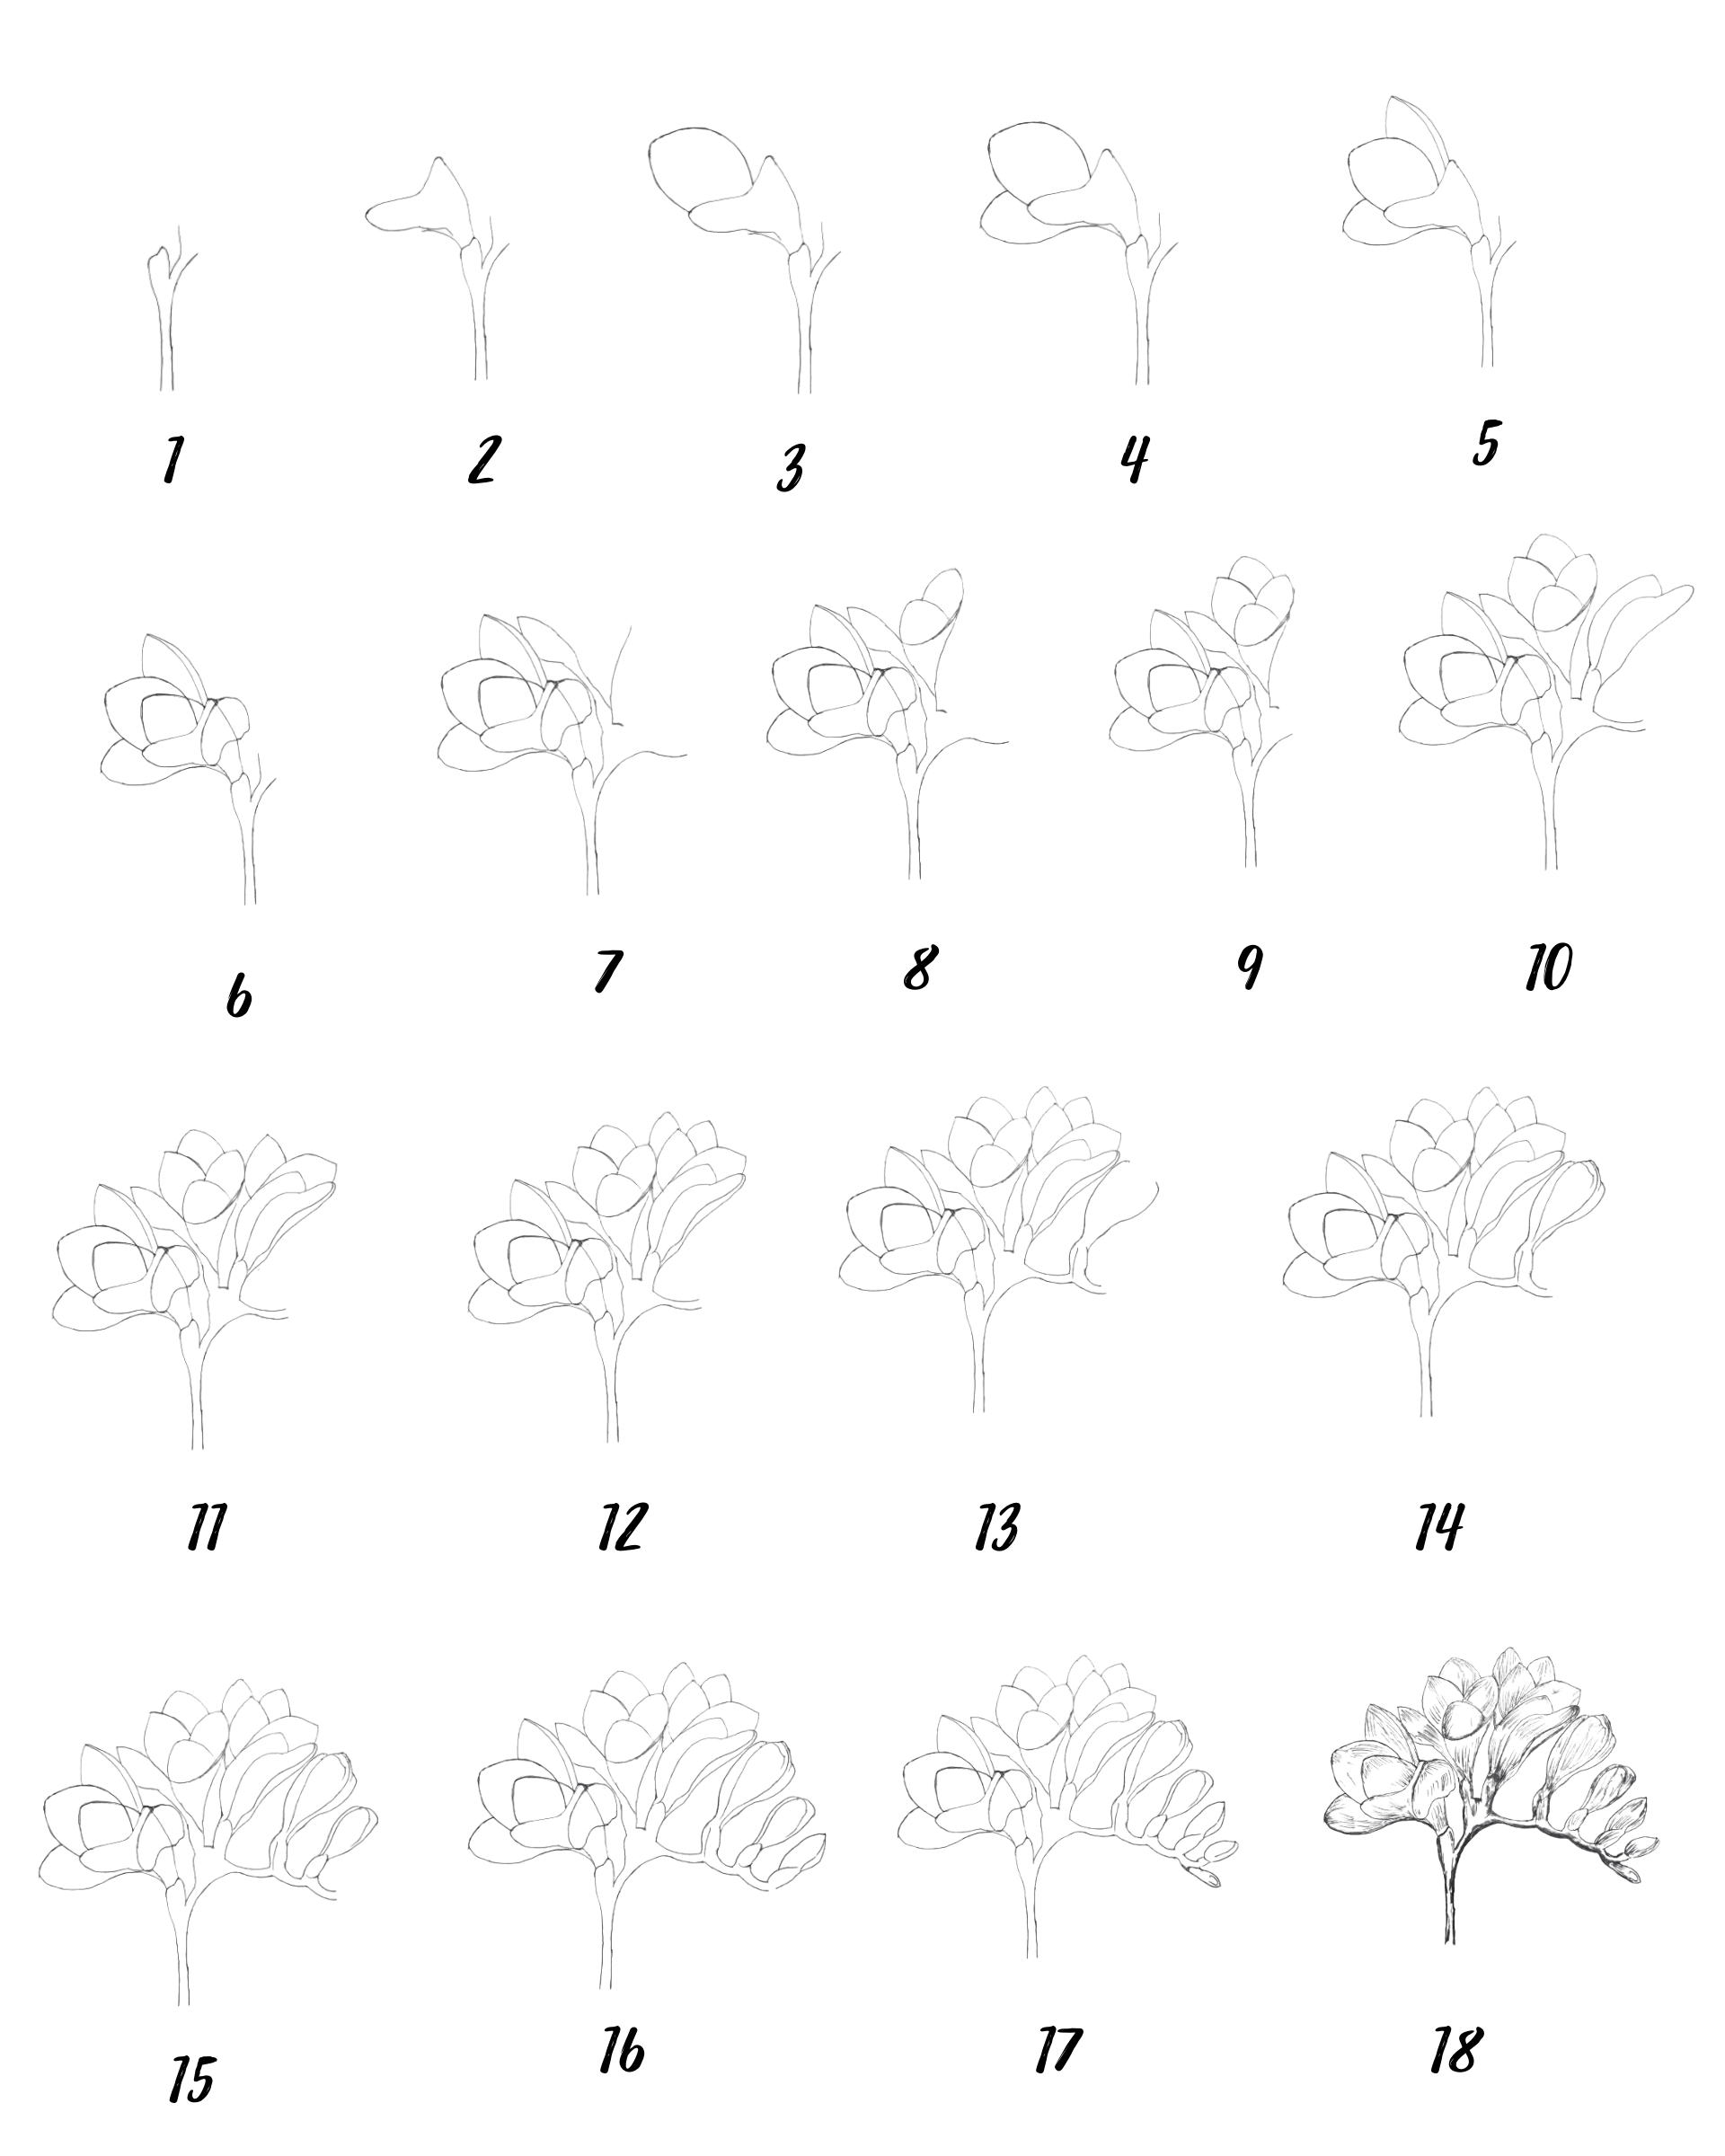 How to Draw Freesia Flower